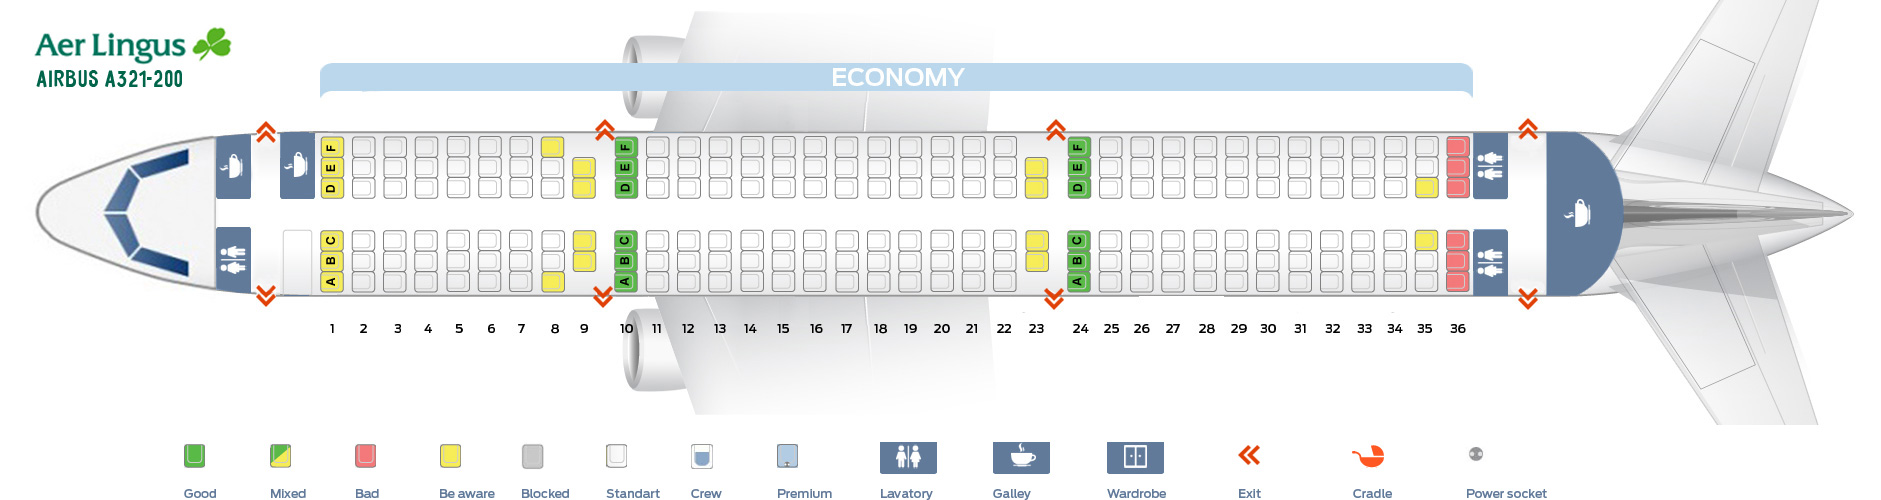 Aer Lingus Airbus Seating Chart